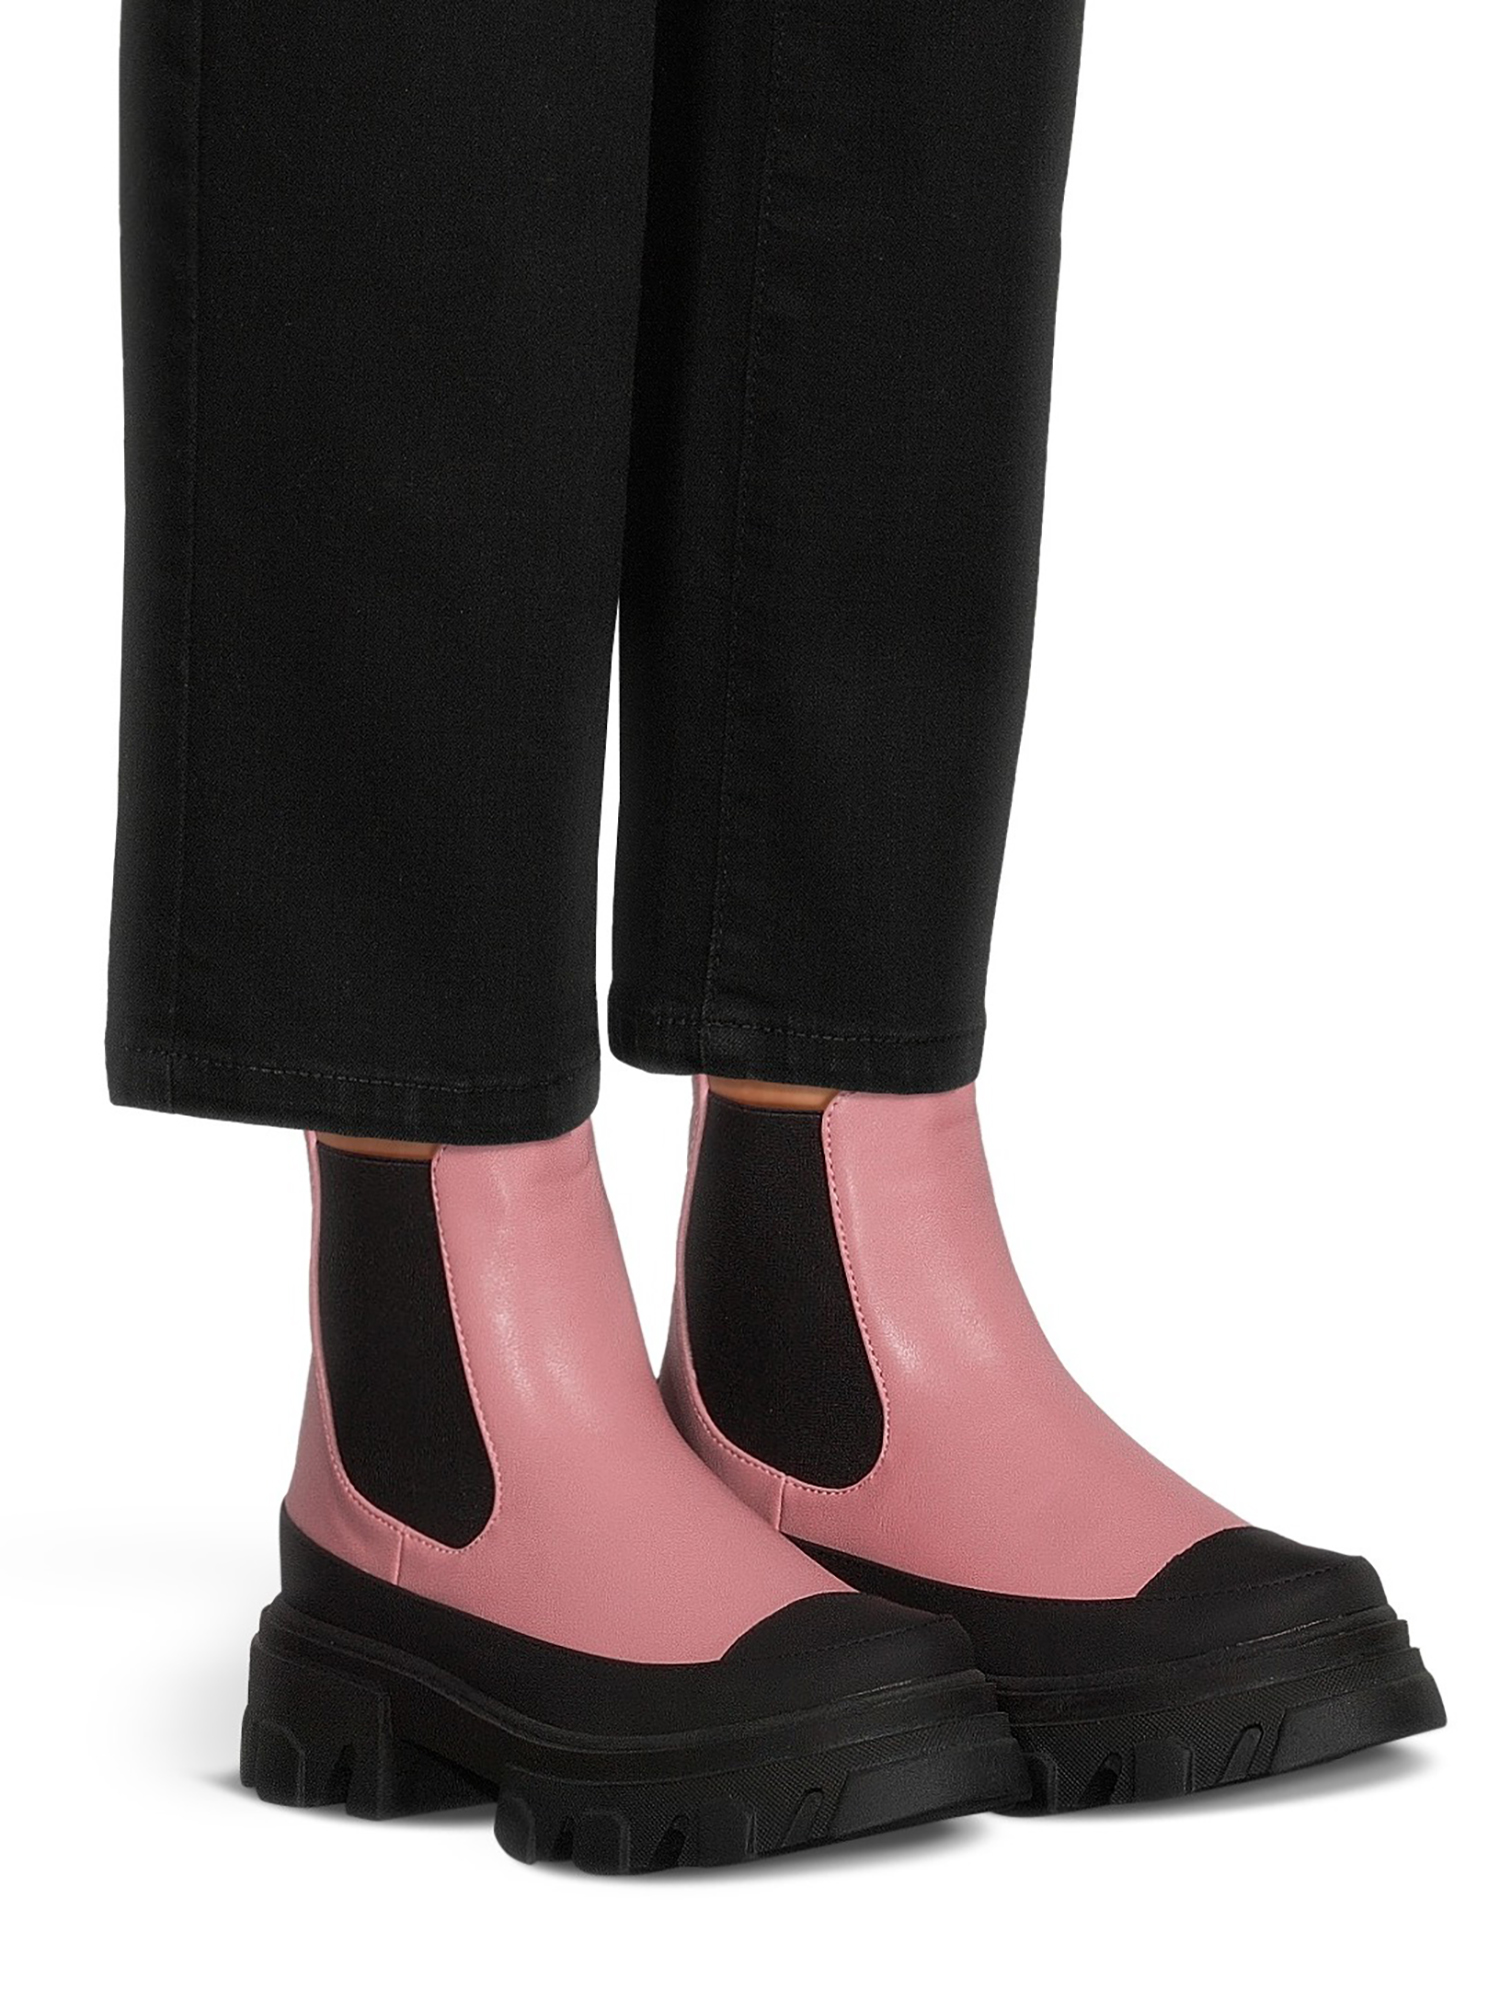 PORTLAND by Portland Boot Company Women's Short Mudguard Chelsea Boots ...